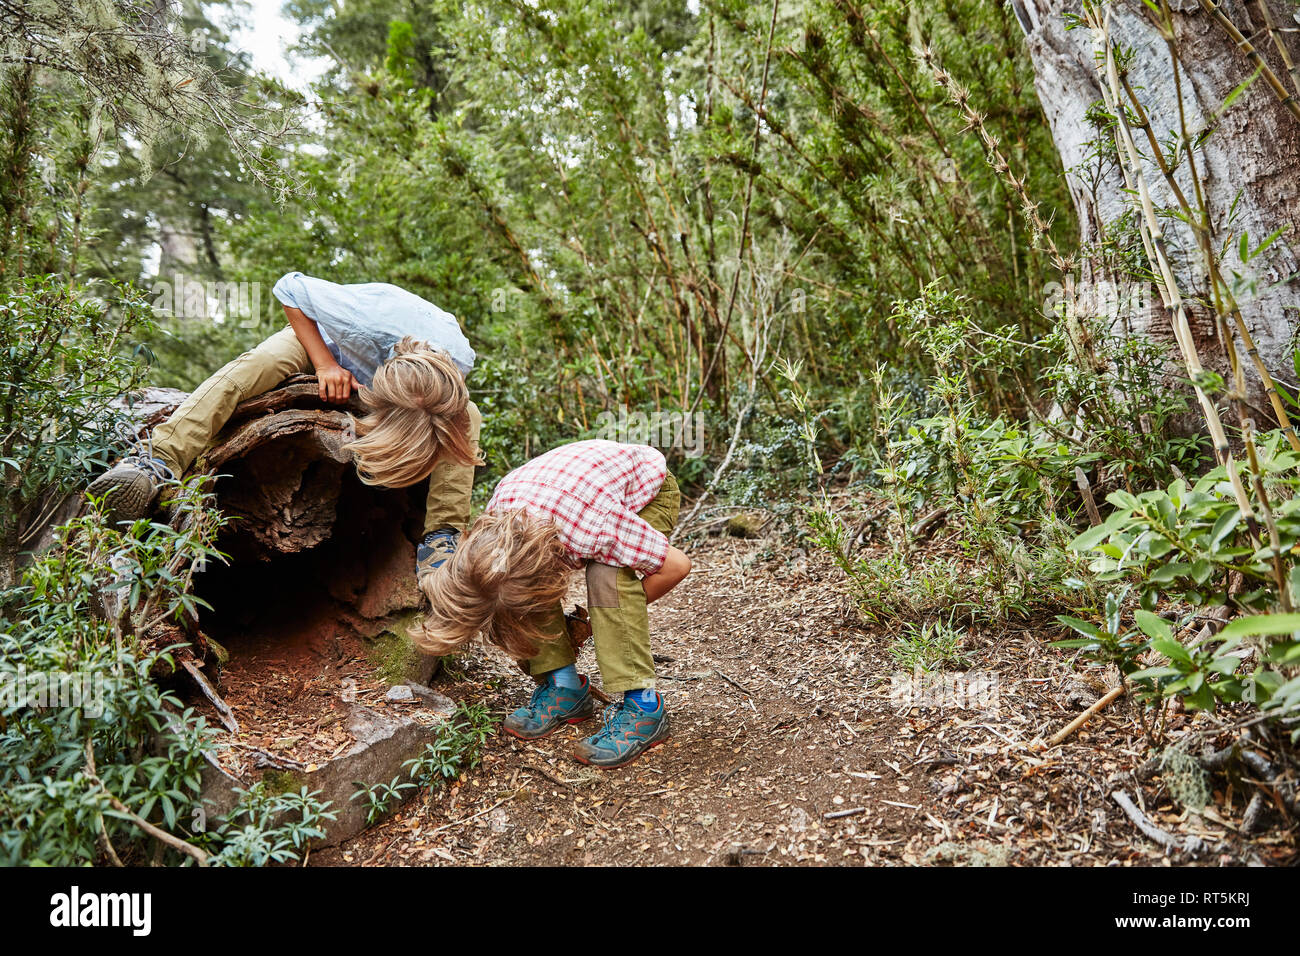 Chile, Purén, Parque Nacional Nahuelbuta, dos chicos mirando a un viejo árbol hueco Foto de stock